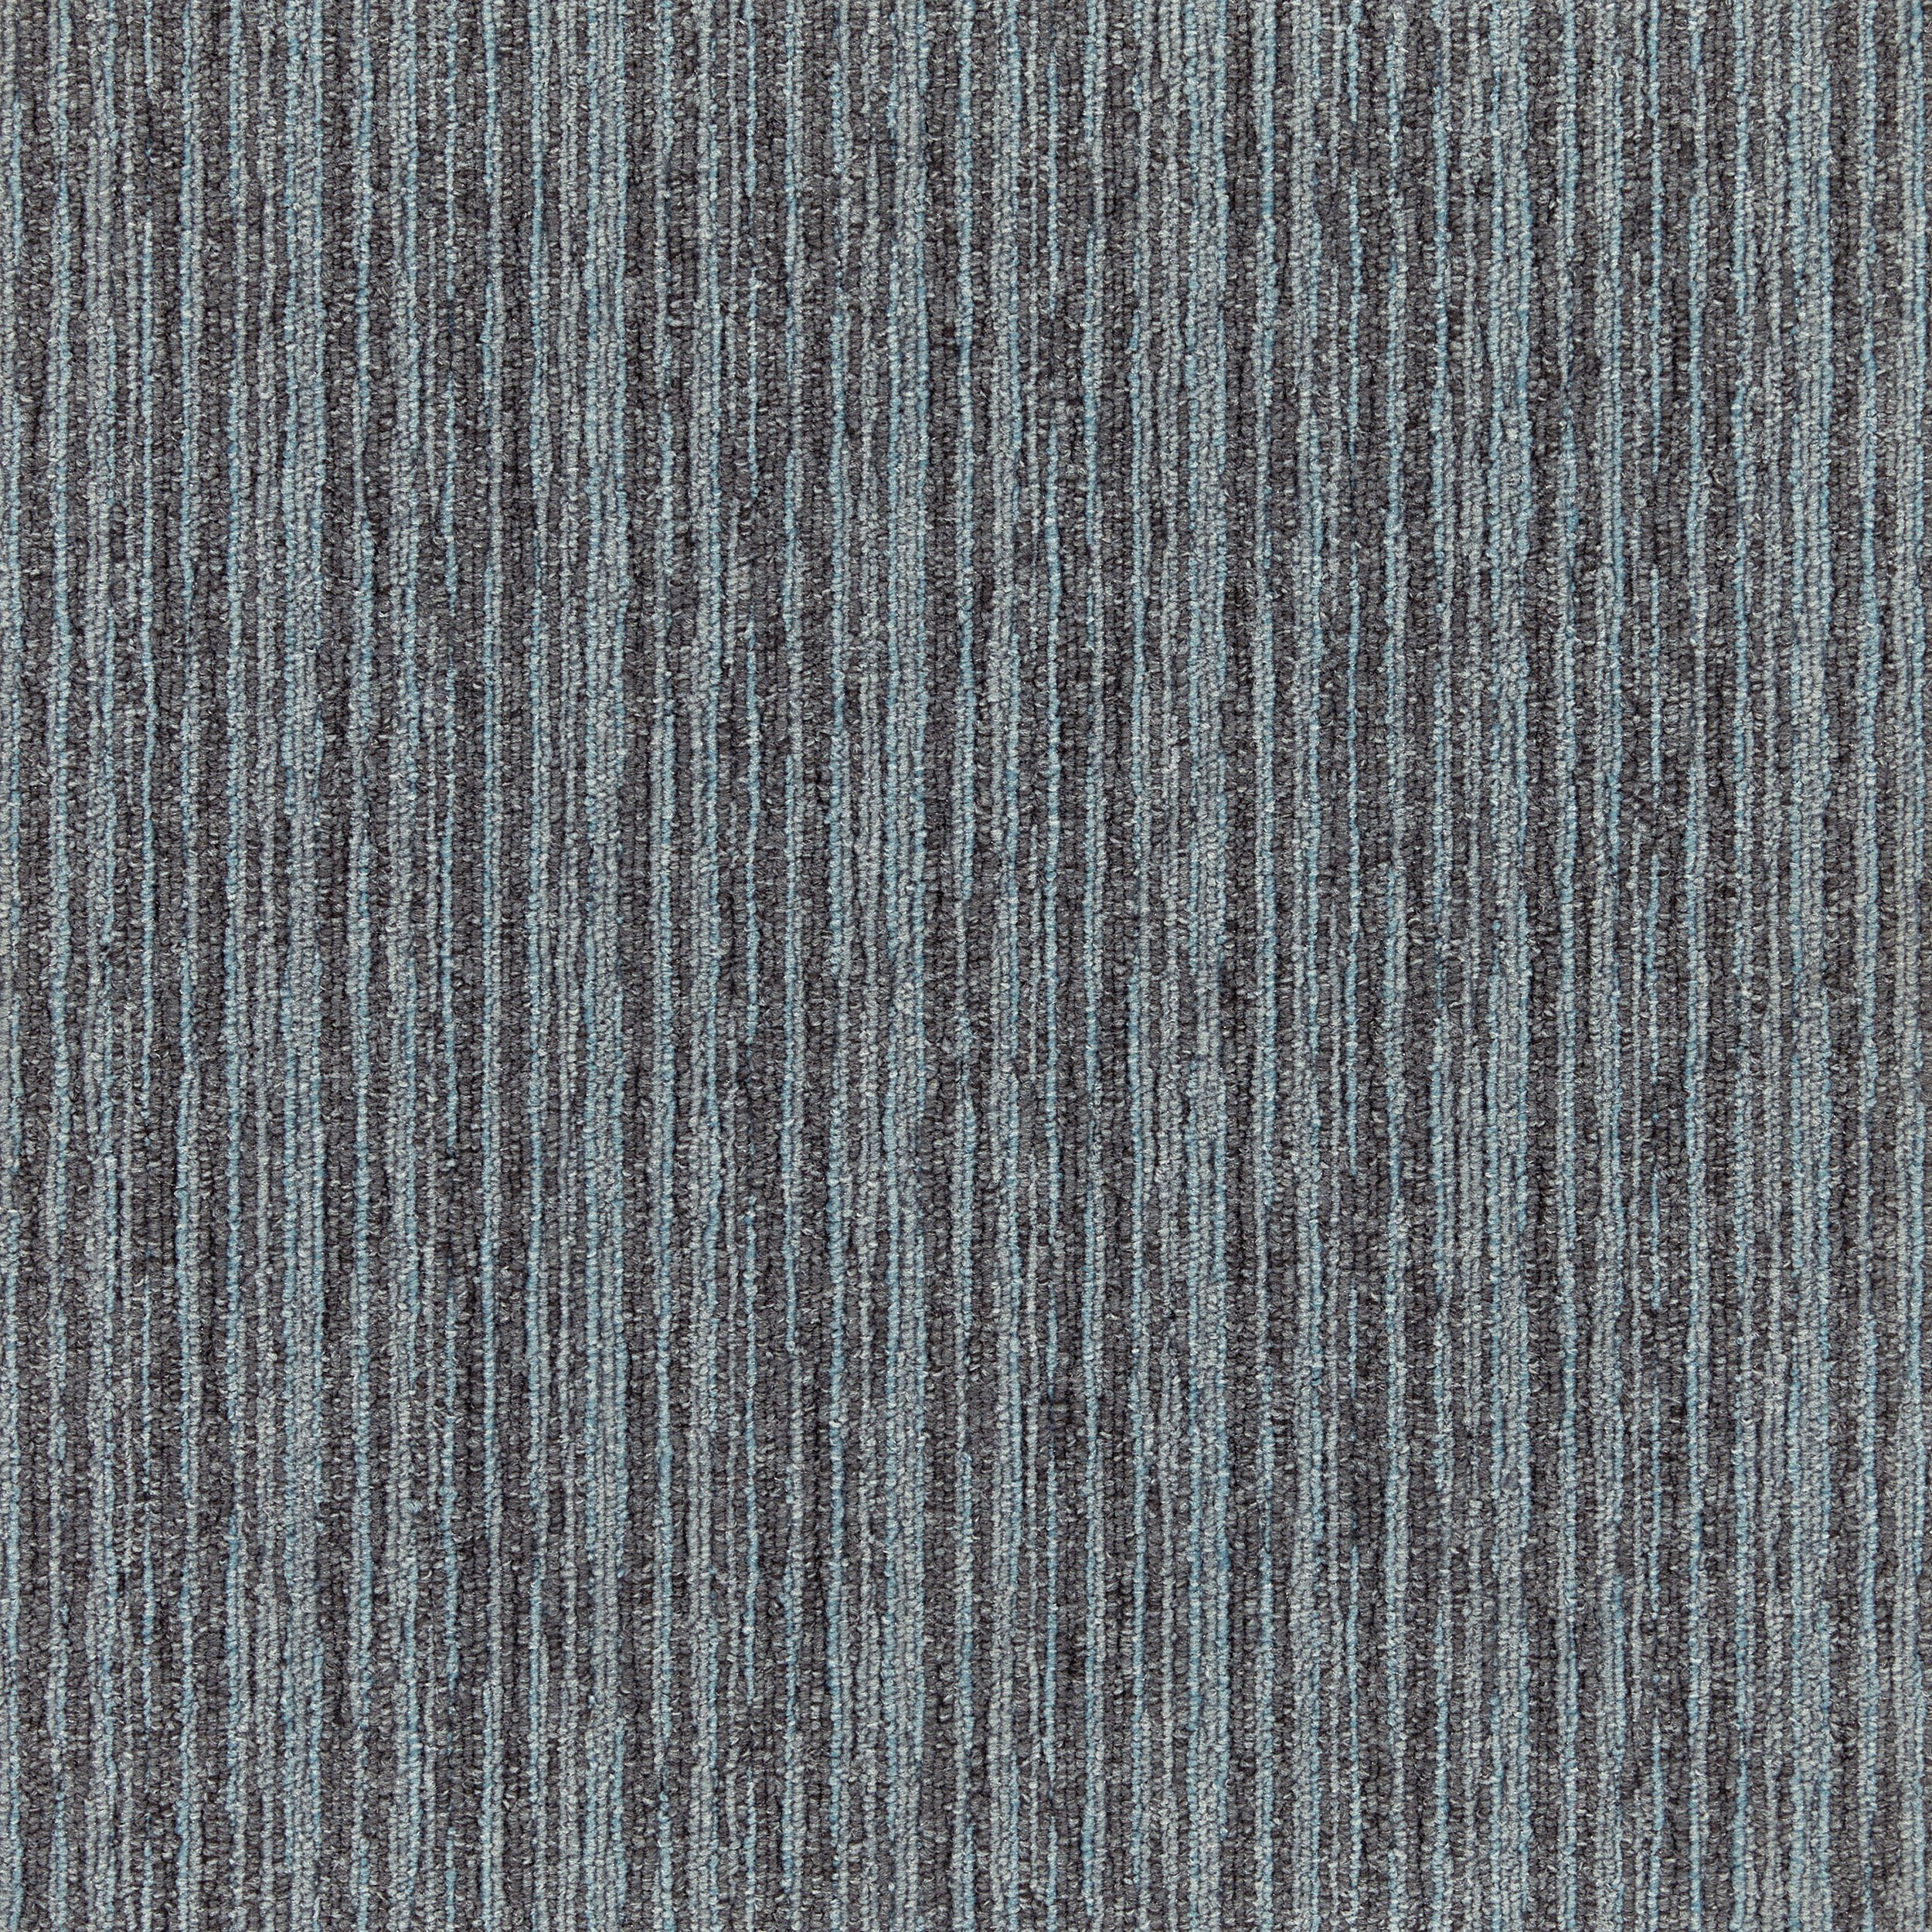 Yuton 105 Carpet Tile In Ice número de imagen 2